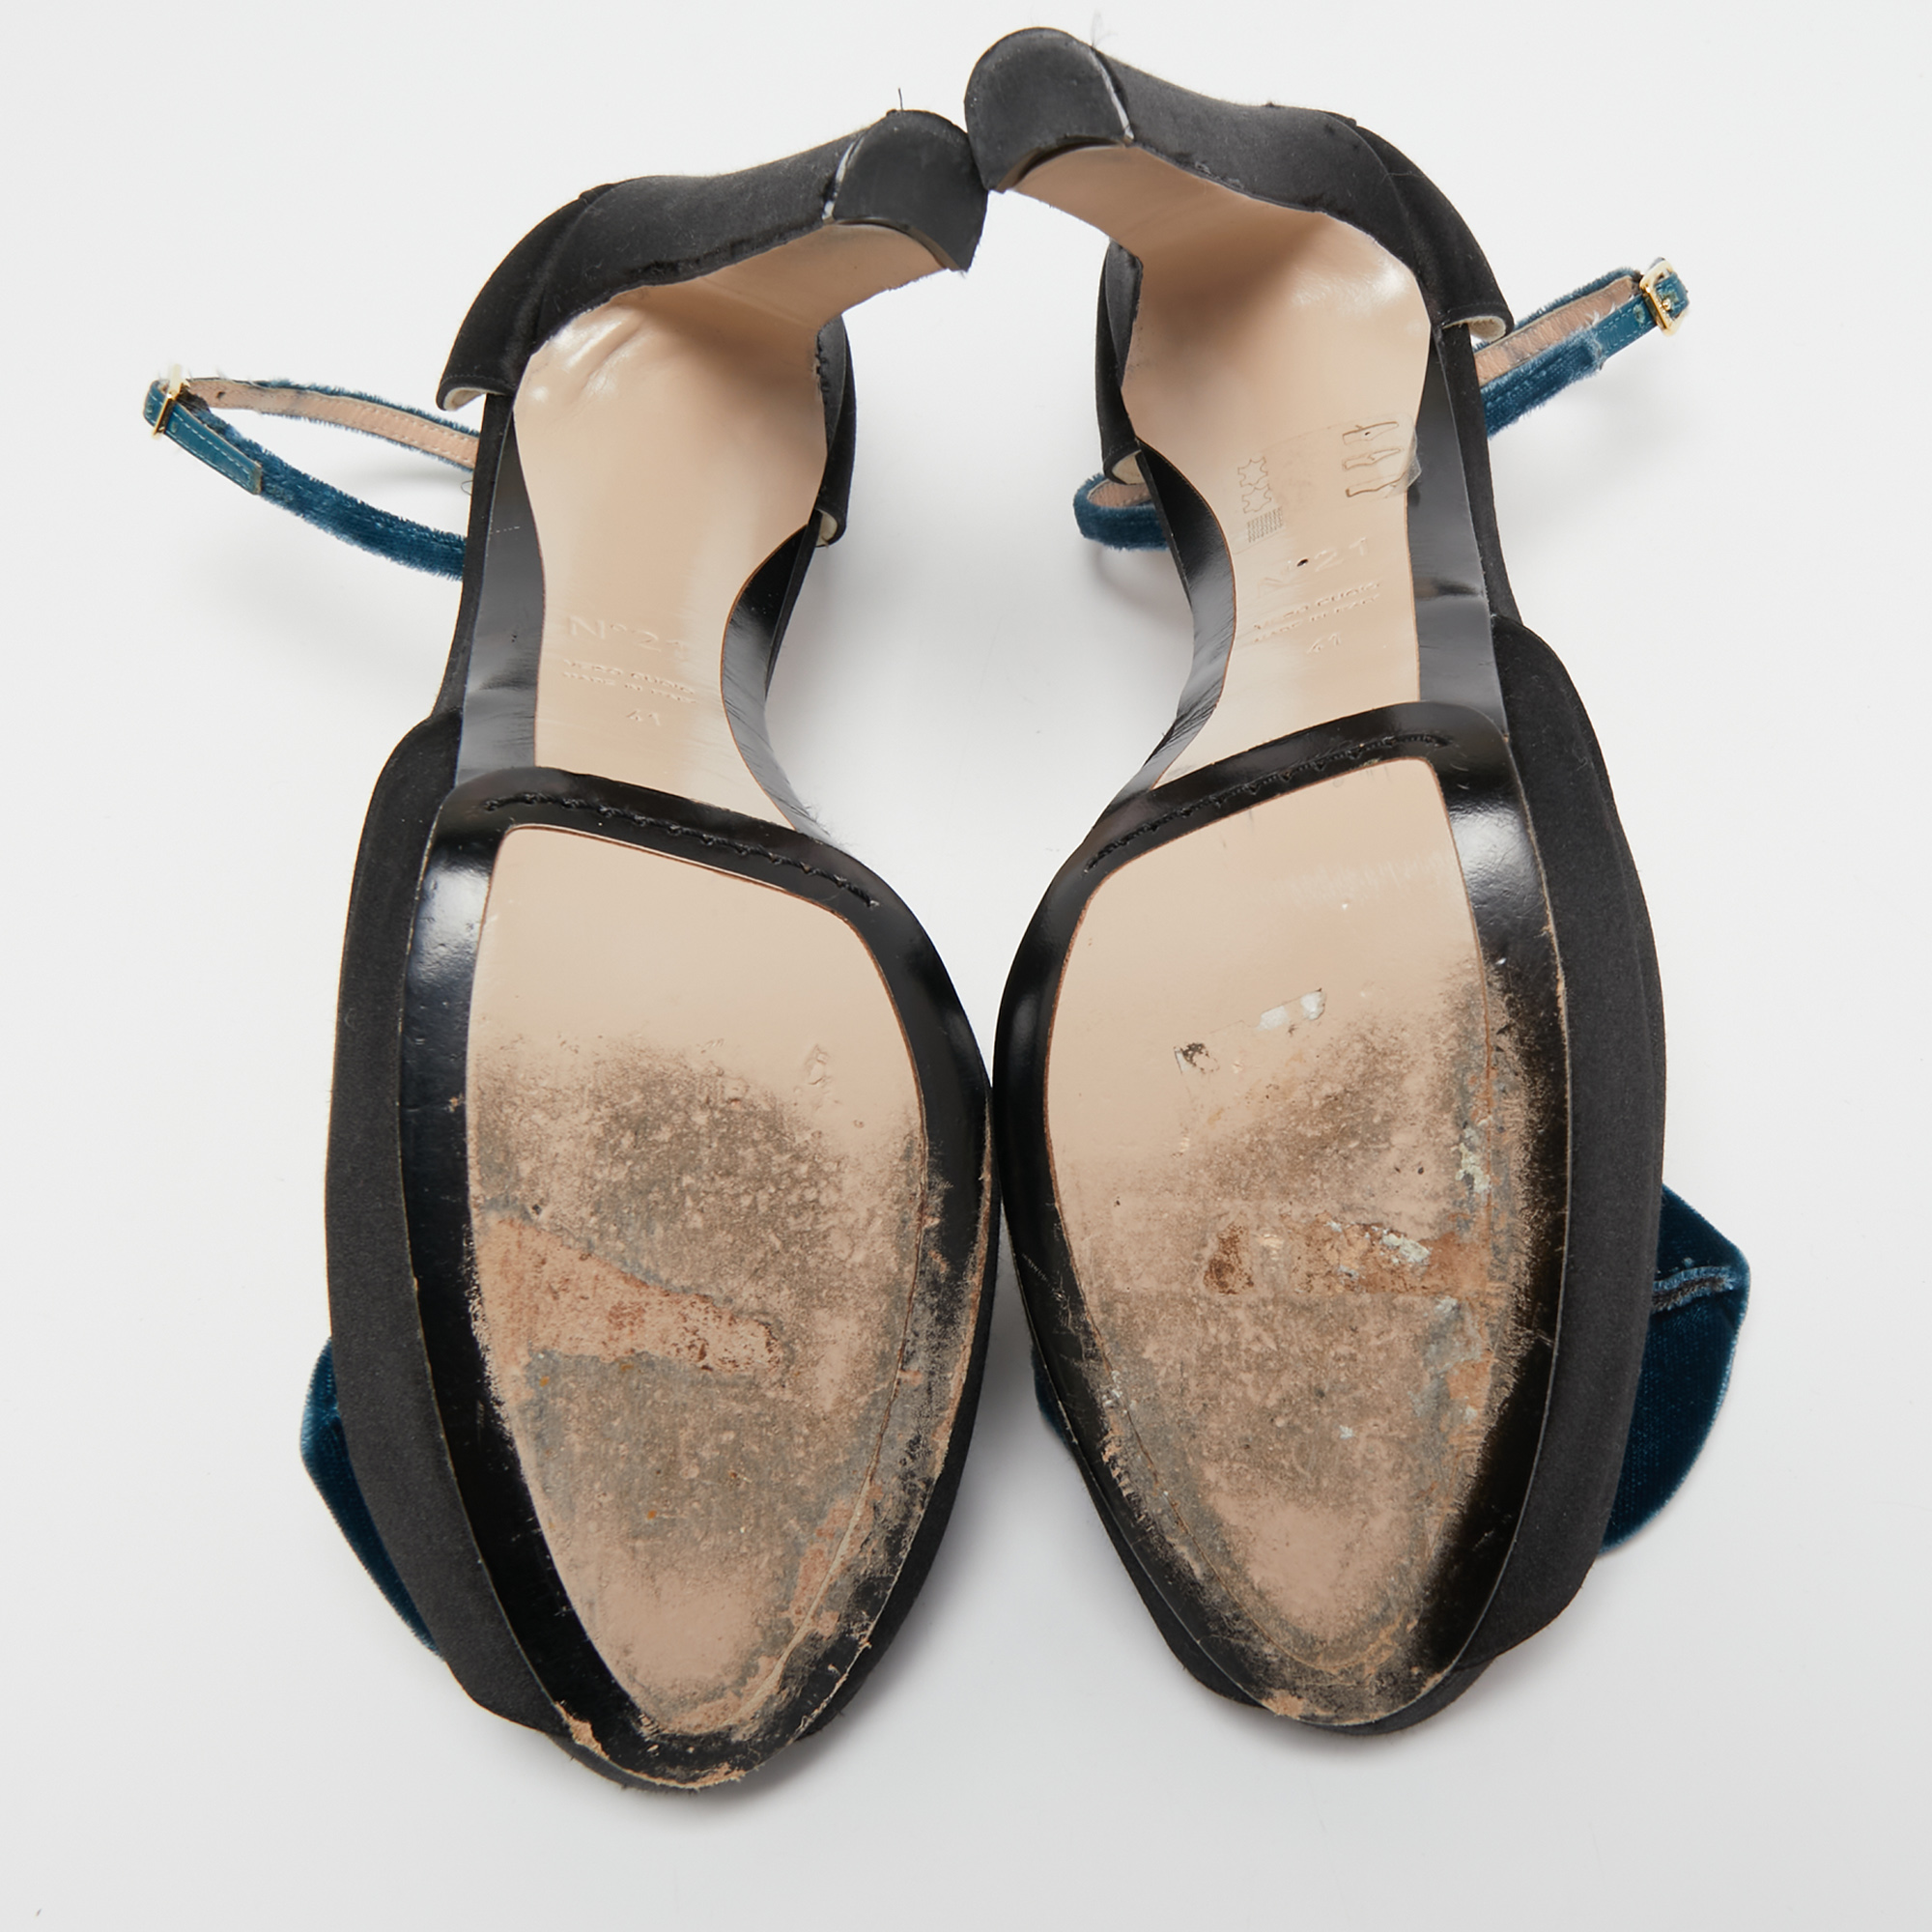 N21 Black Satin Bow Peep Toe Ankle Strap Sandals Size 41